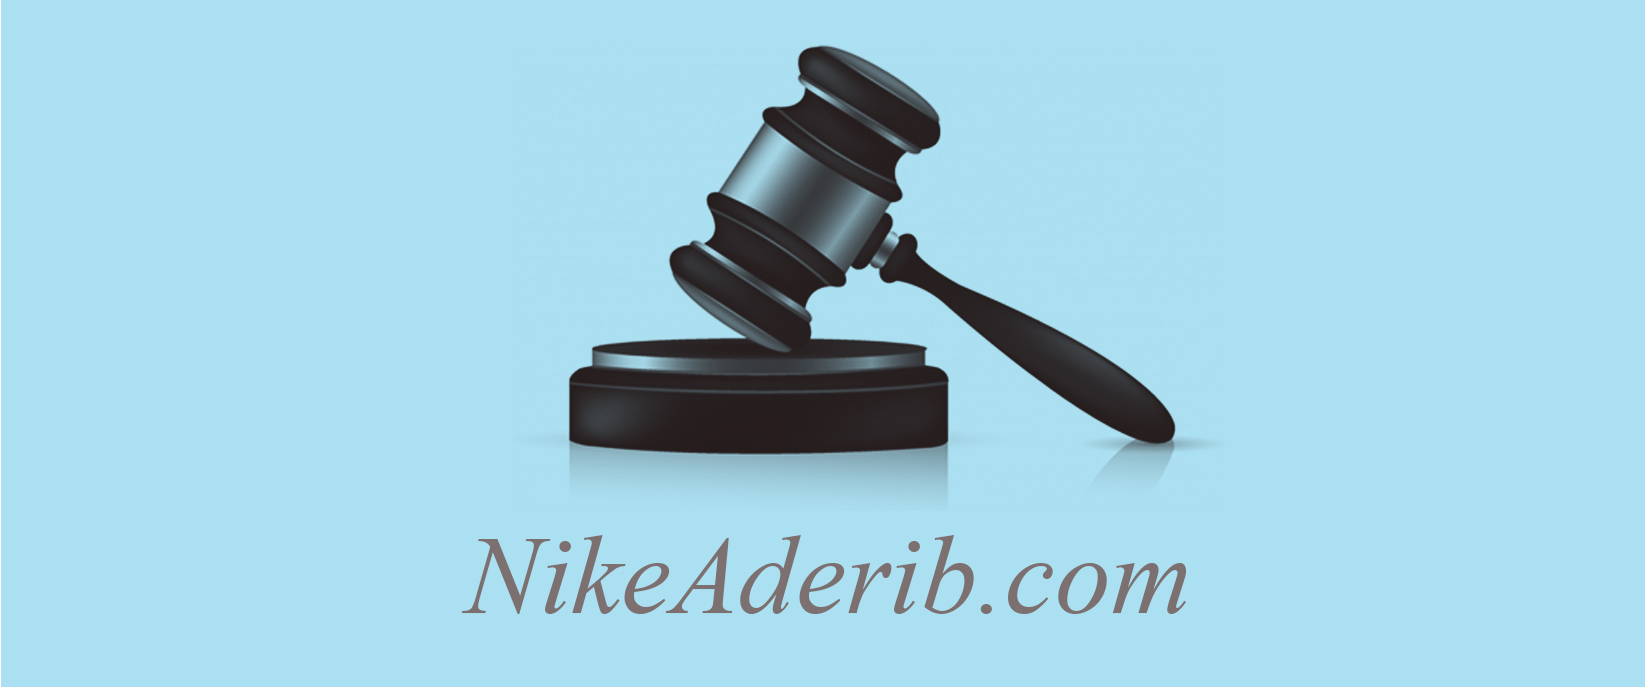 Nikeaderib.com